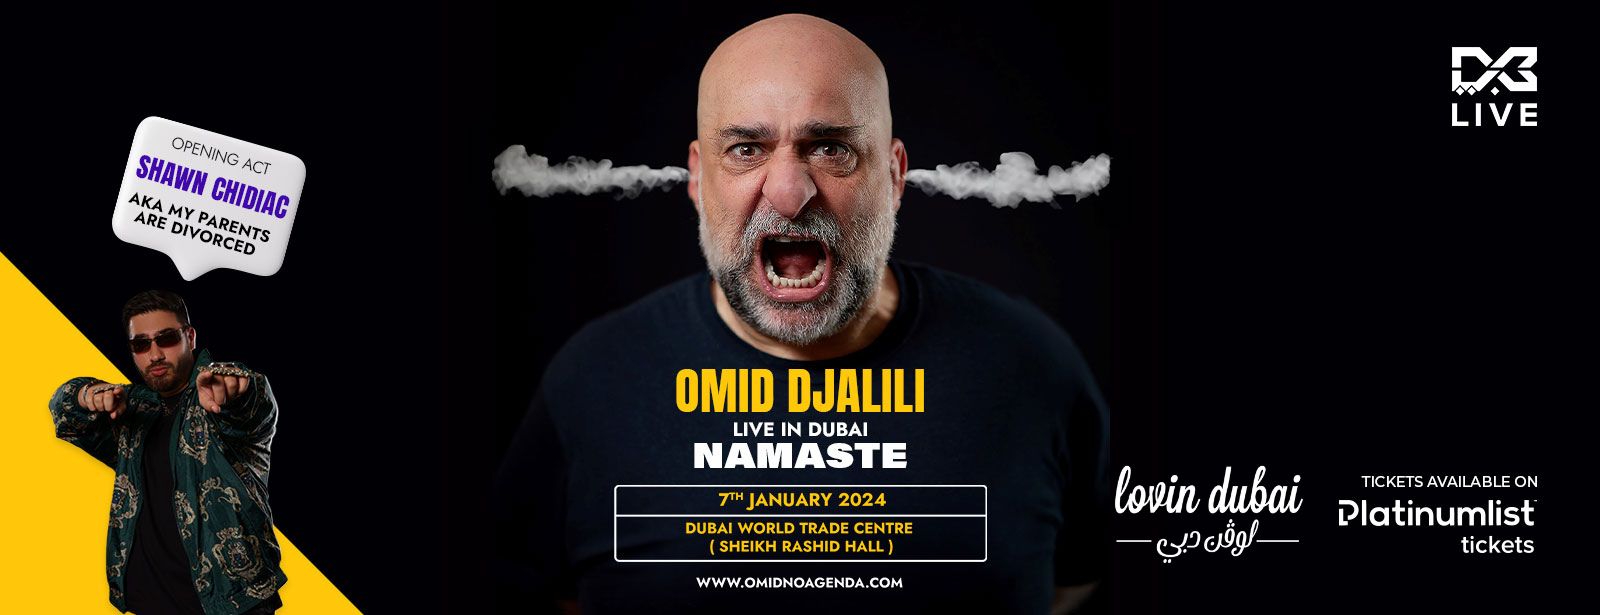 Omid Djalili – Namaste Live in Dubai - Coming Soon in UAE